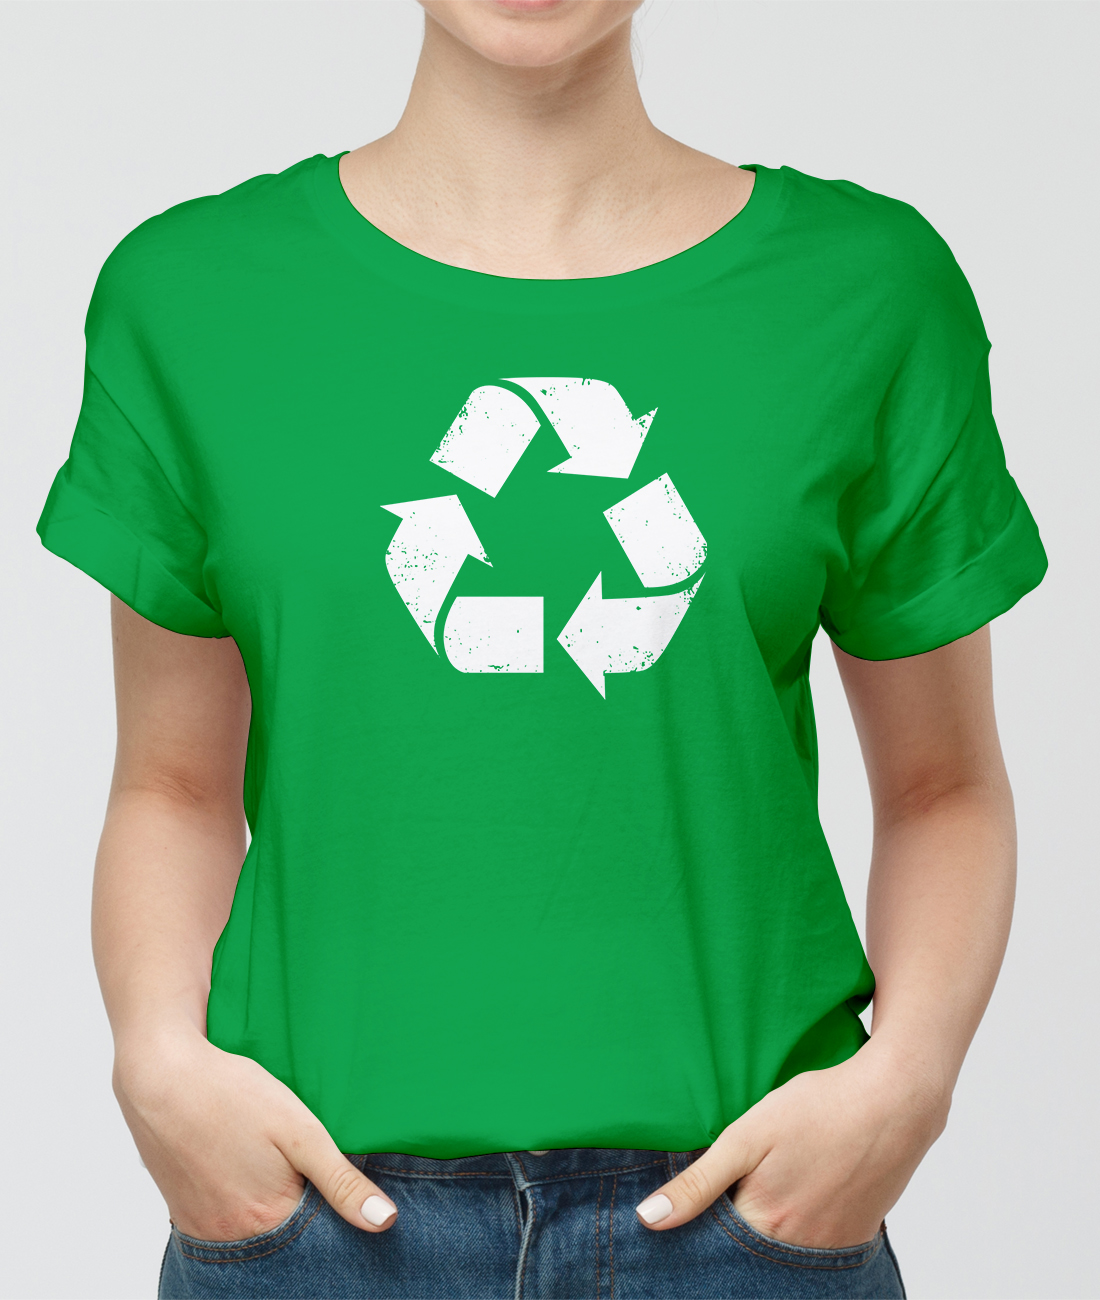 Tričko s potiskem Recyklace tričko